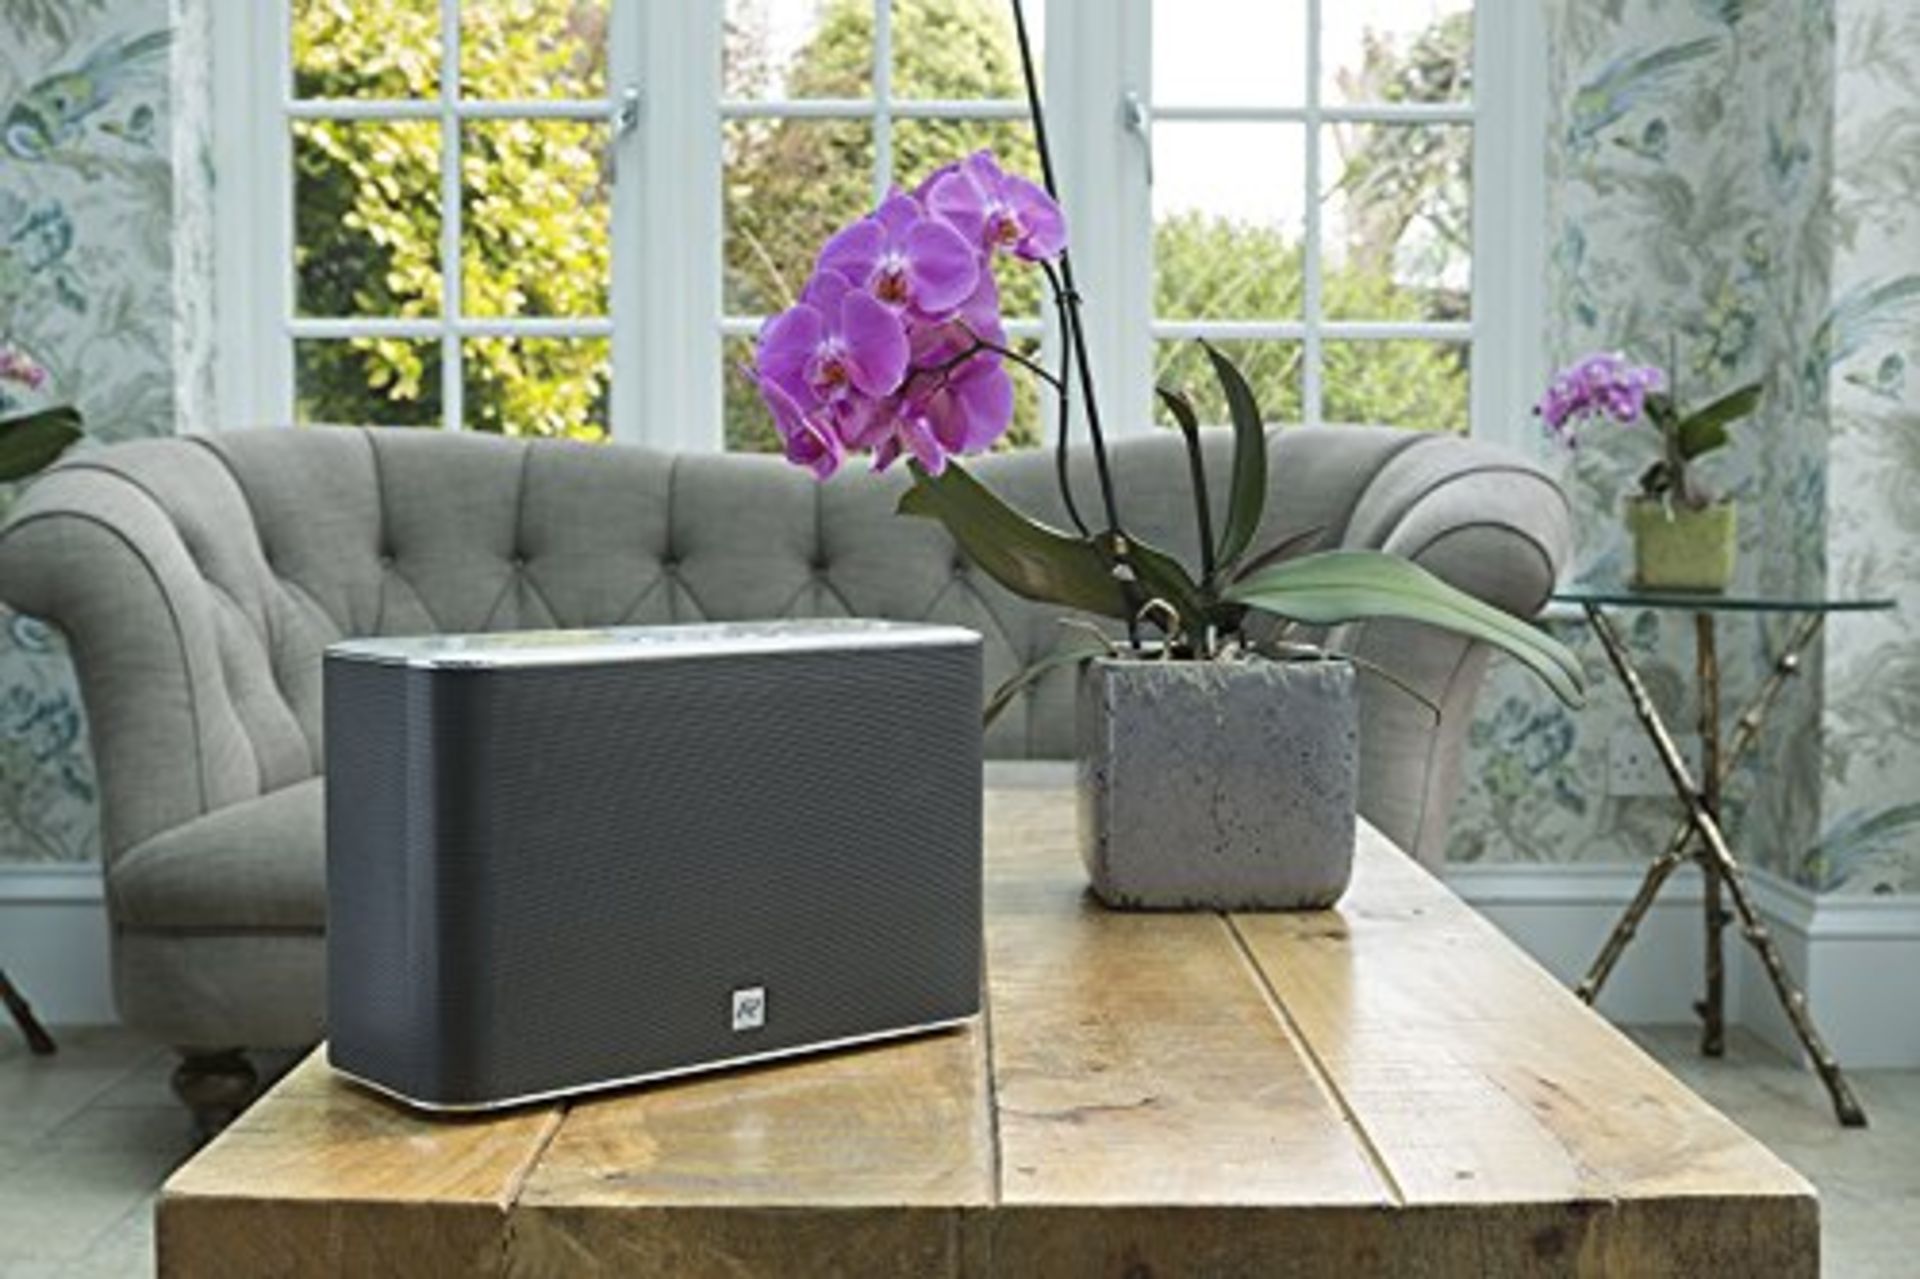 V Brand New Roberts S2 R-Line Wireless Stereo Multi Room Speaker - Amazon Price £282.12 - UNDOK - Image 2 of 4